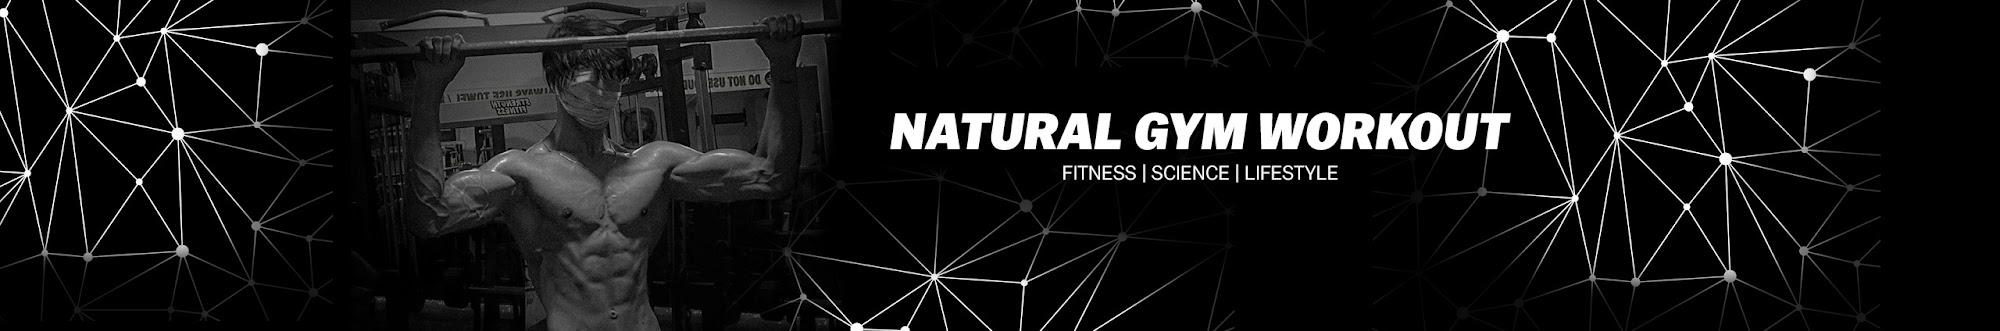 Natural Gym Workout